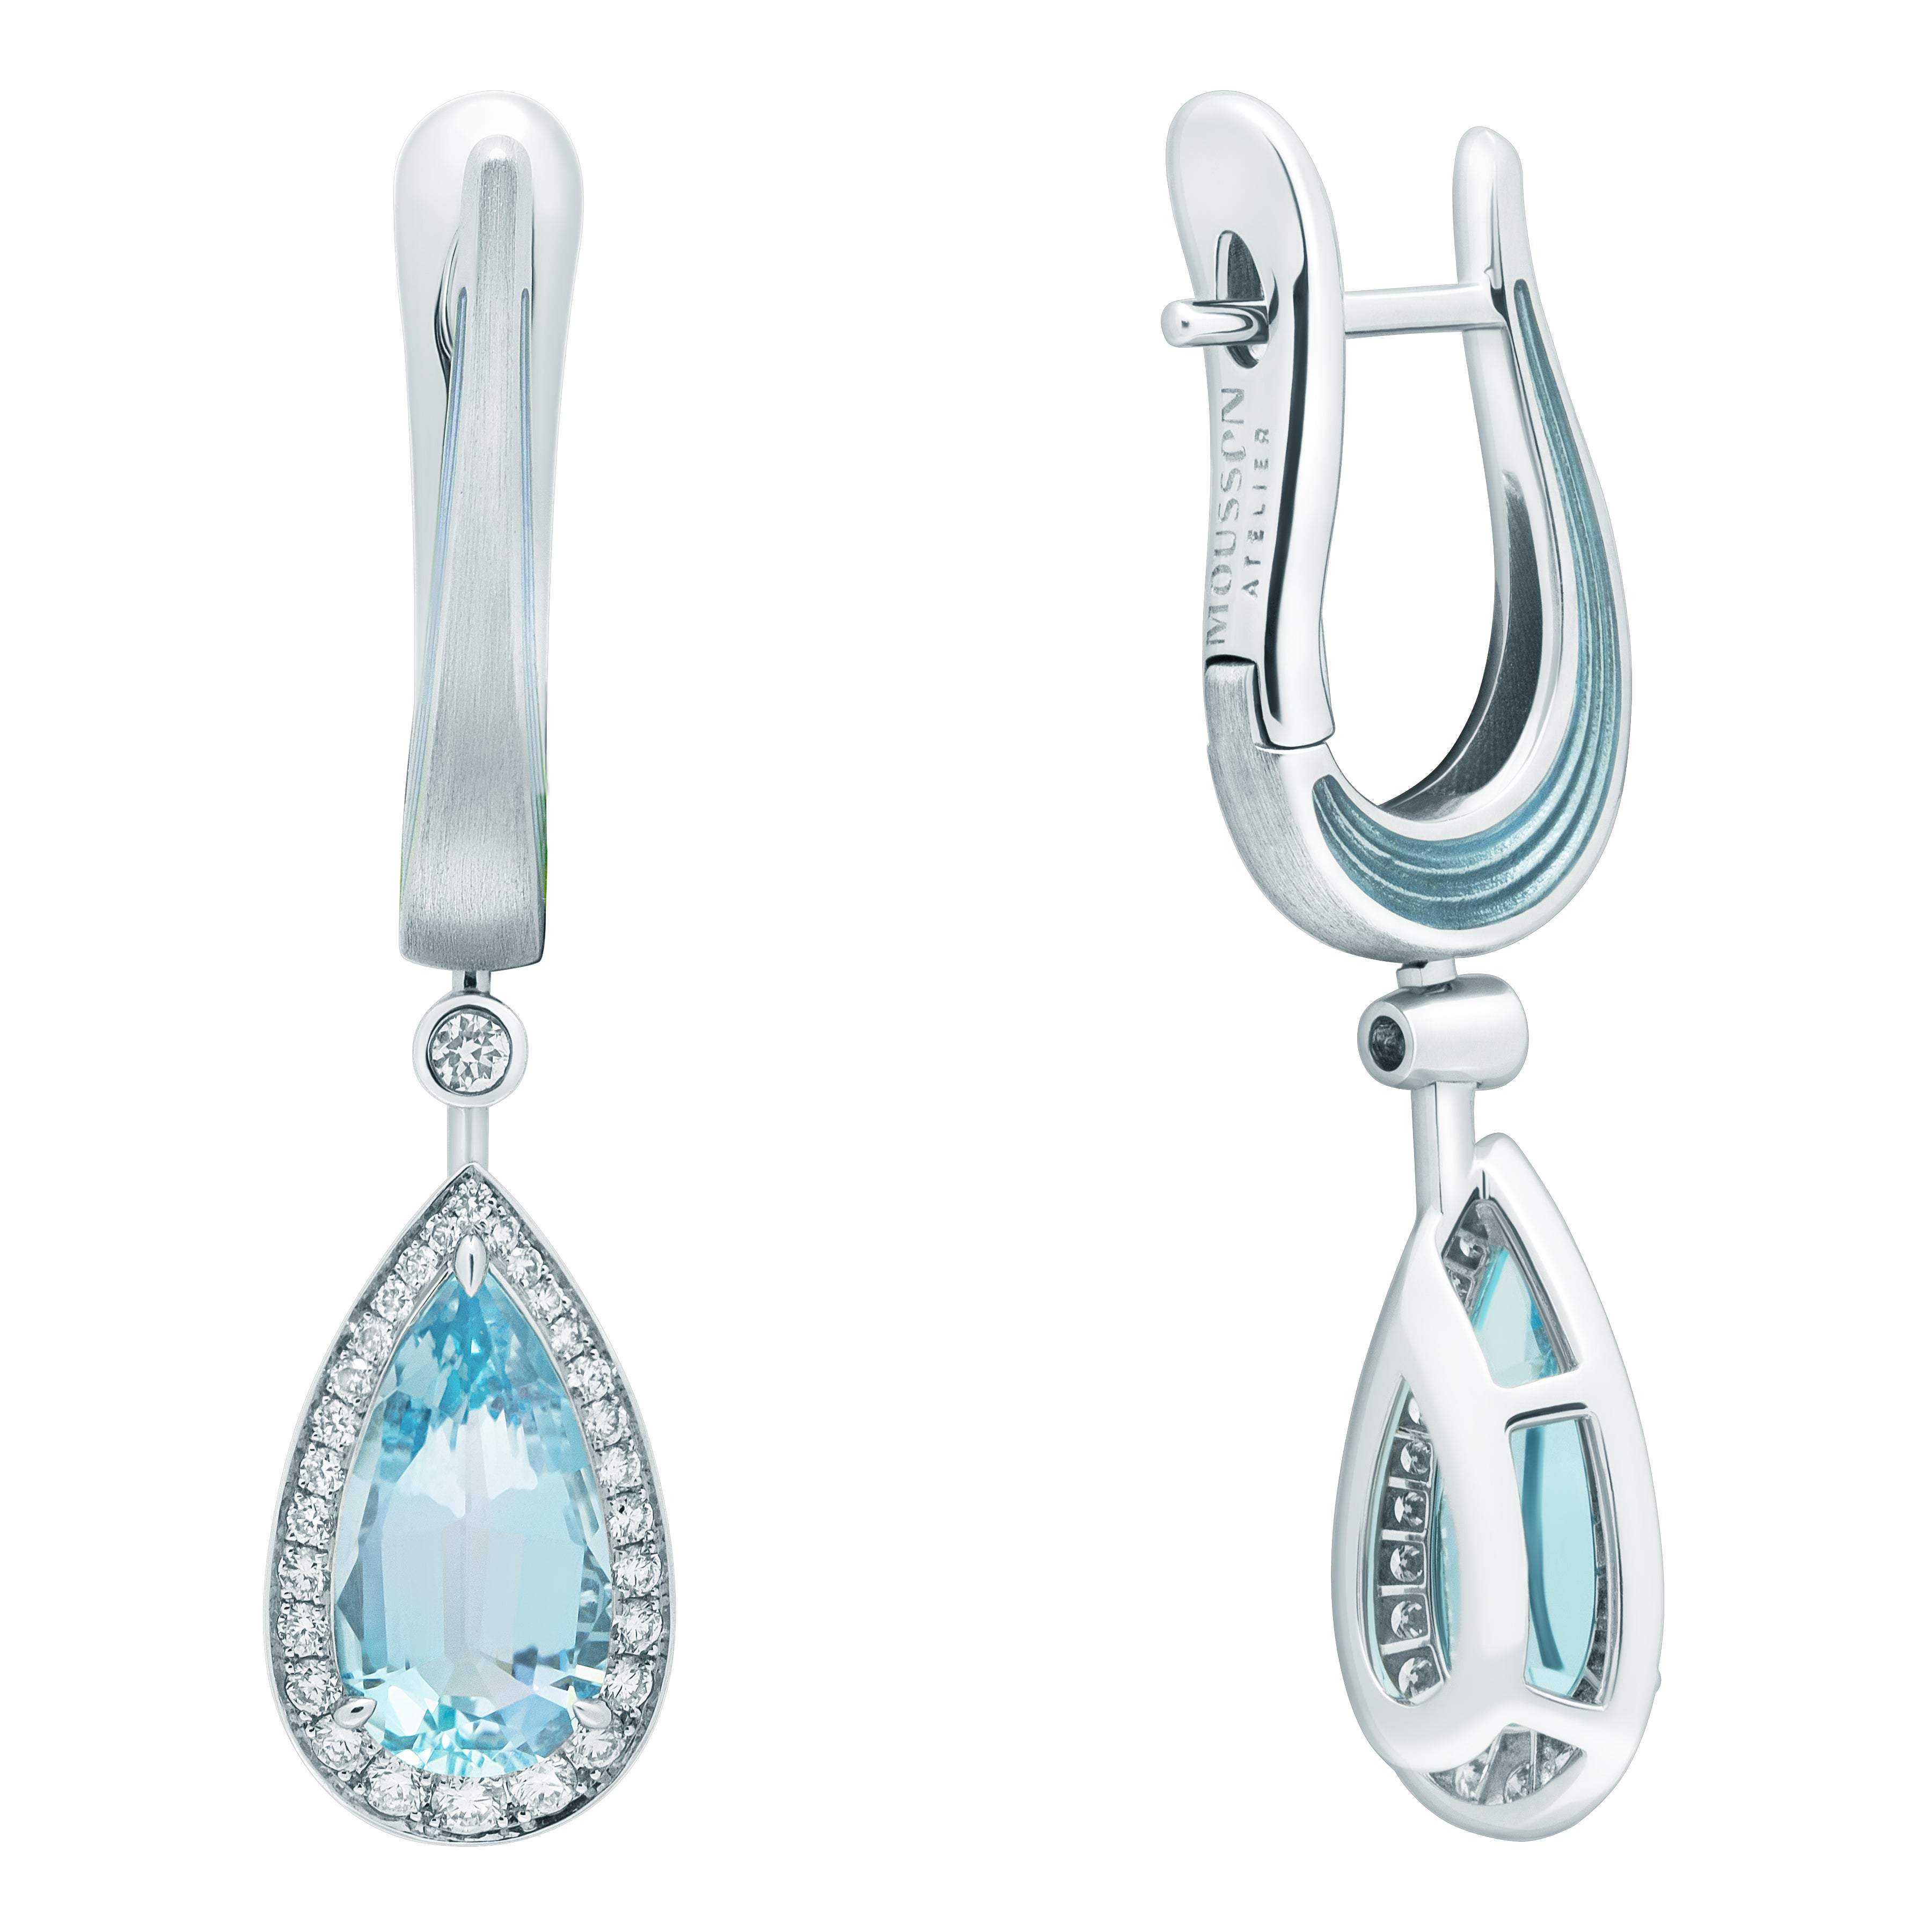 E 0143-20 18K White Gold, Aquamarine, Diamonds Earrings